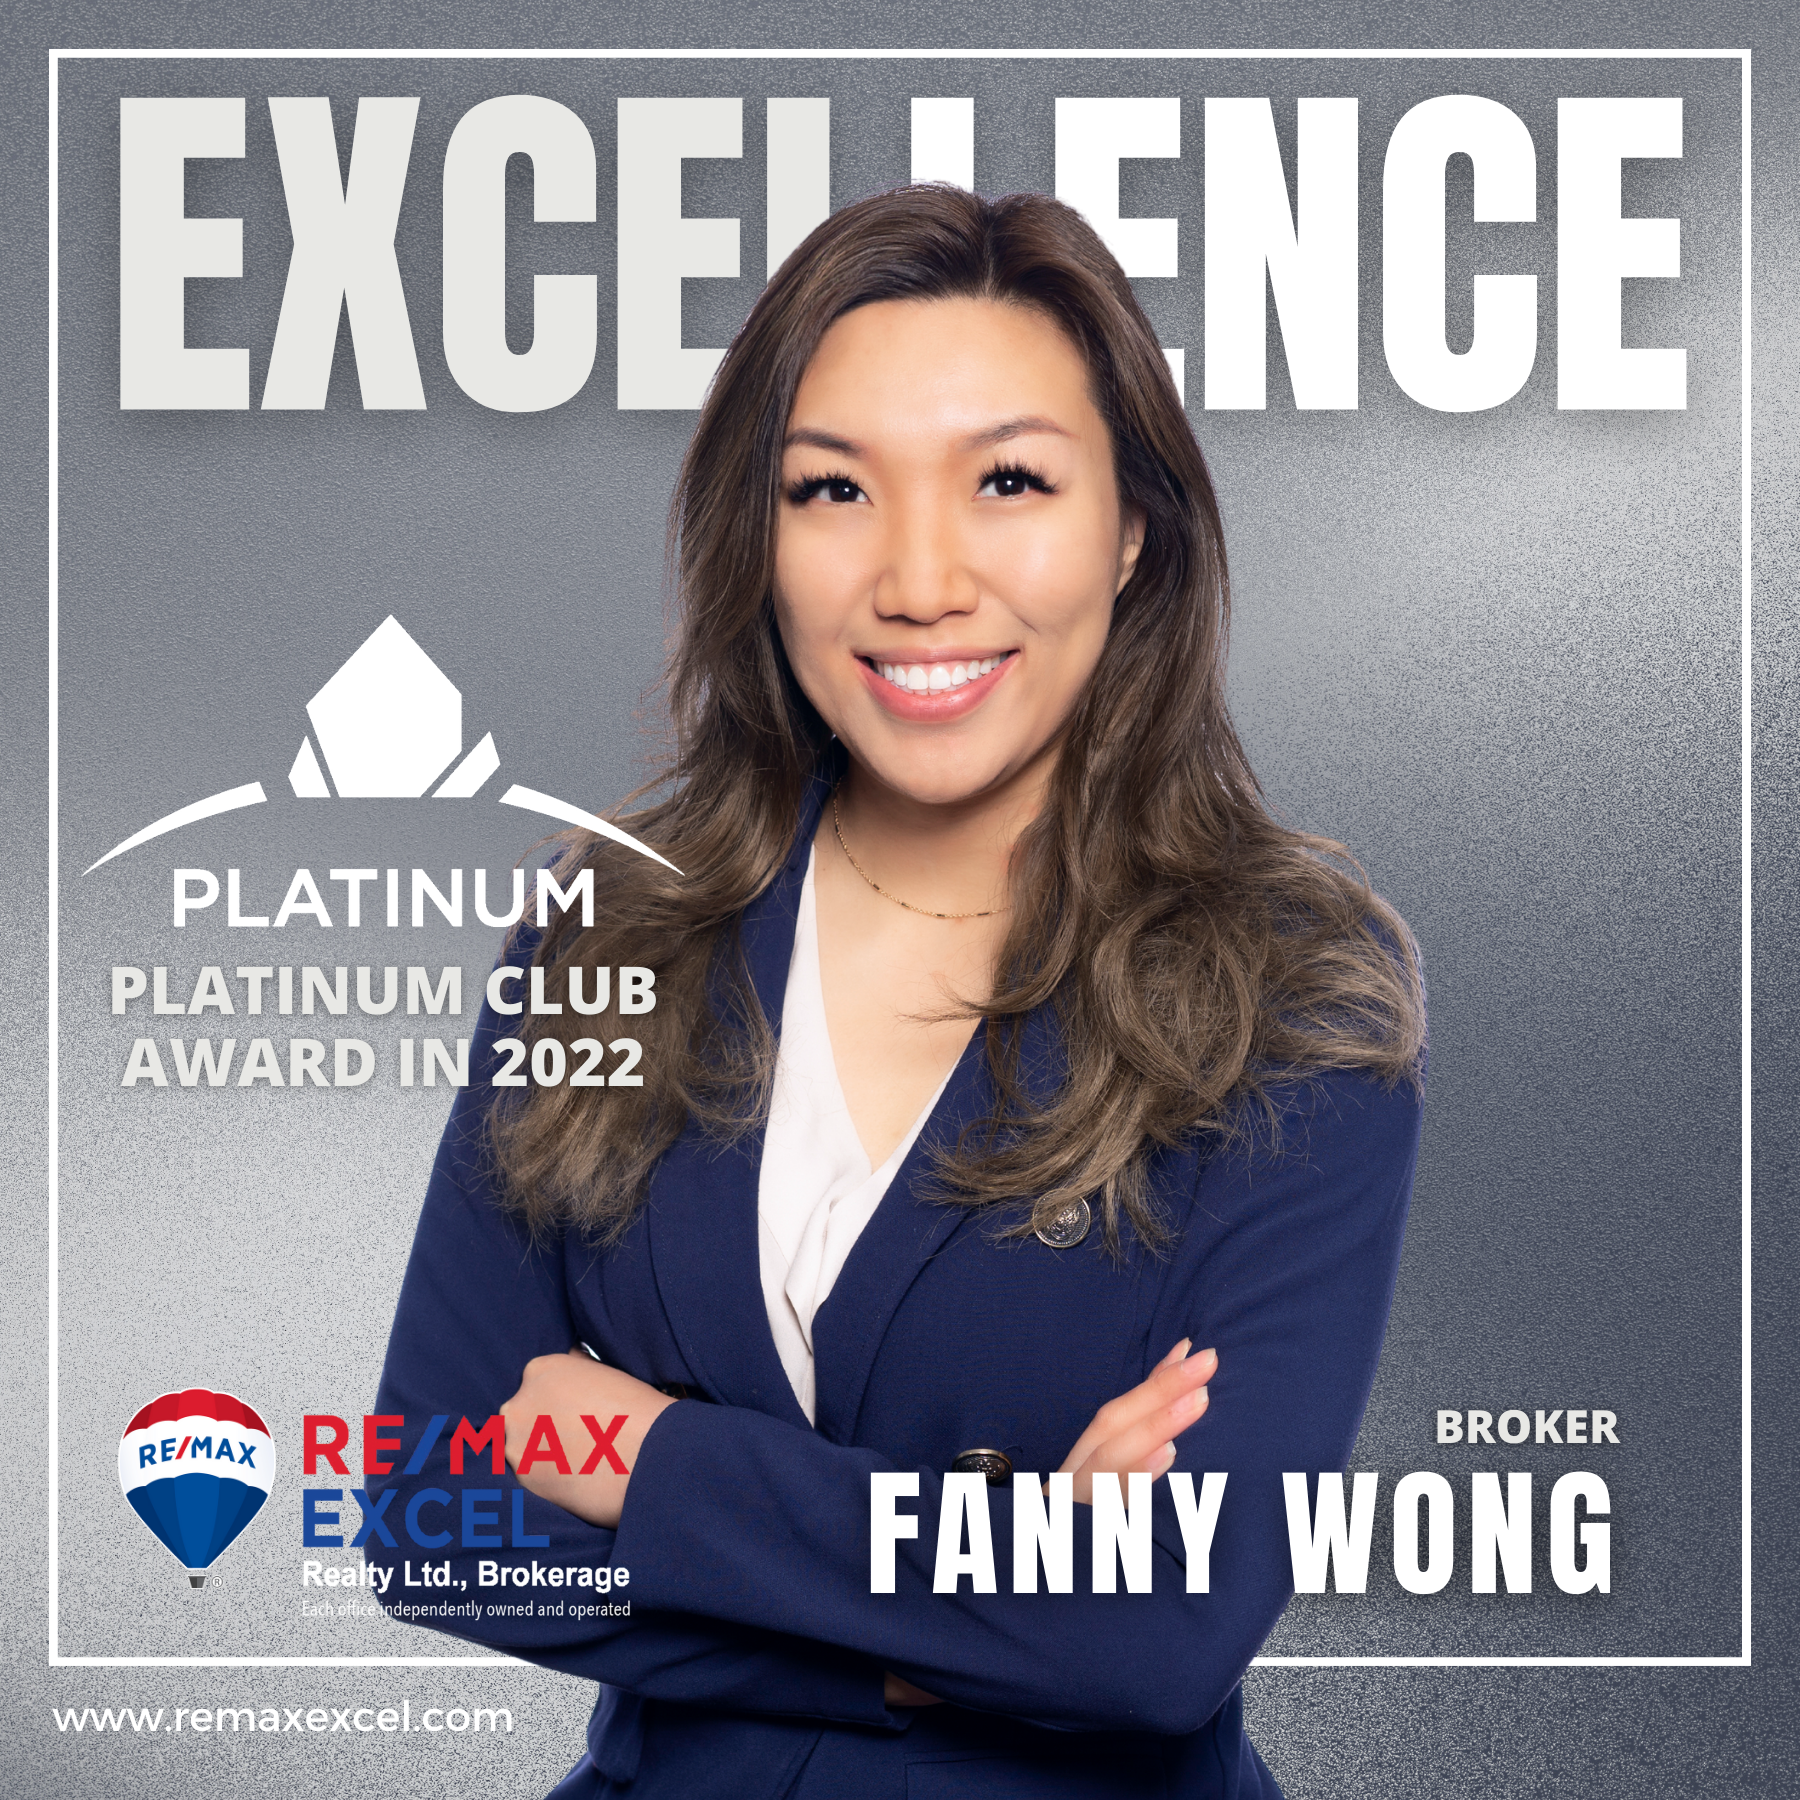 4 - Fanny wong NEW